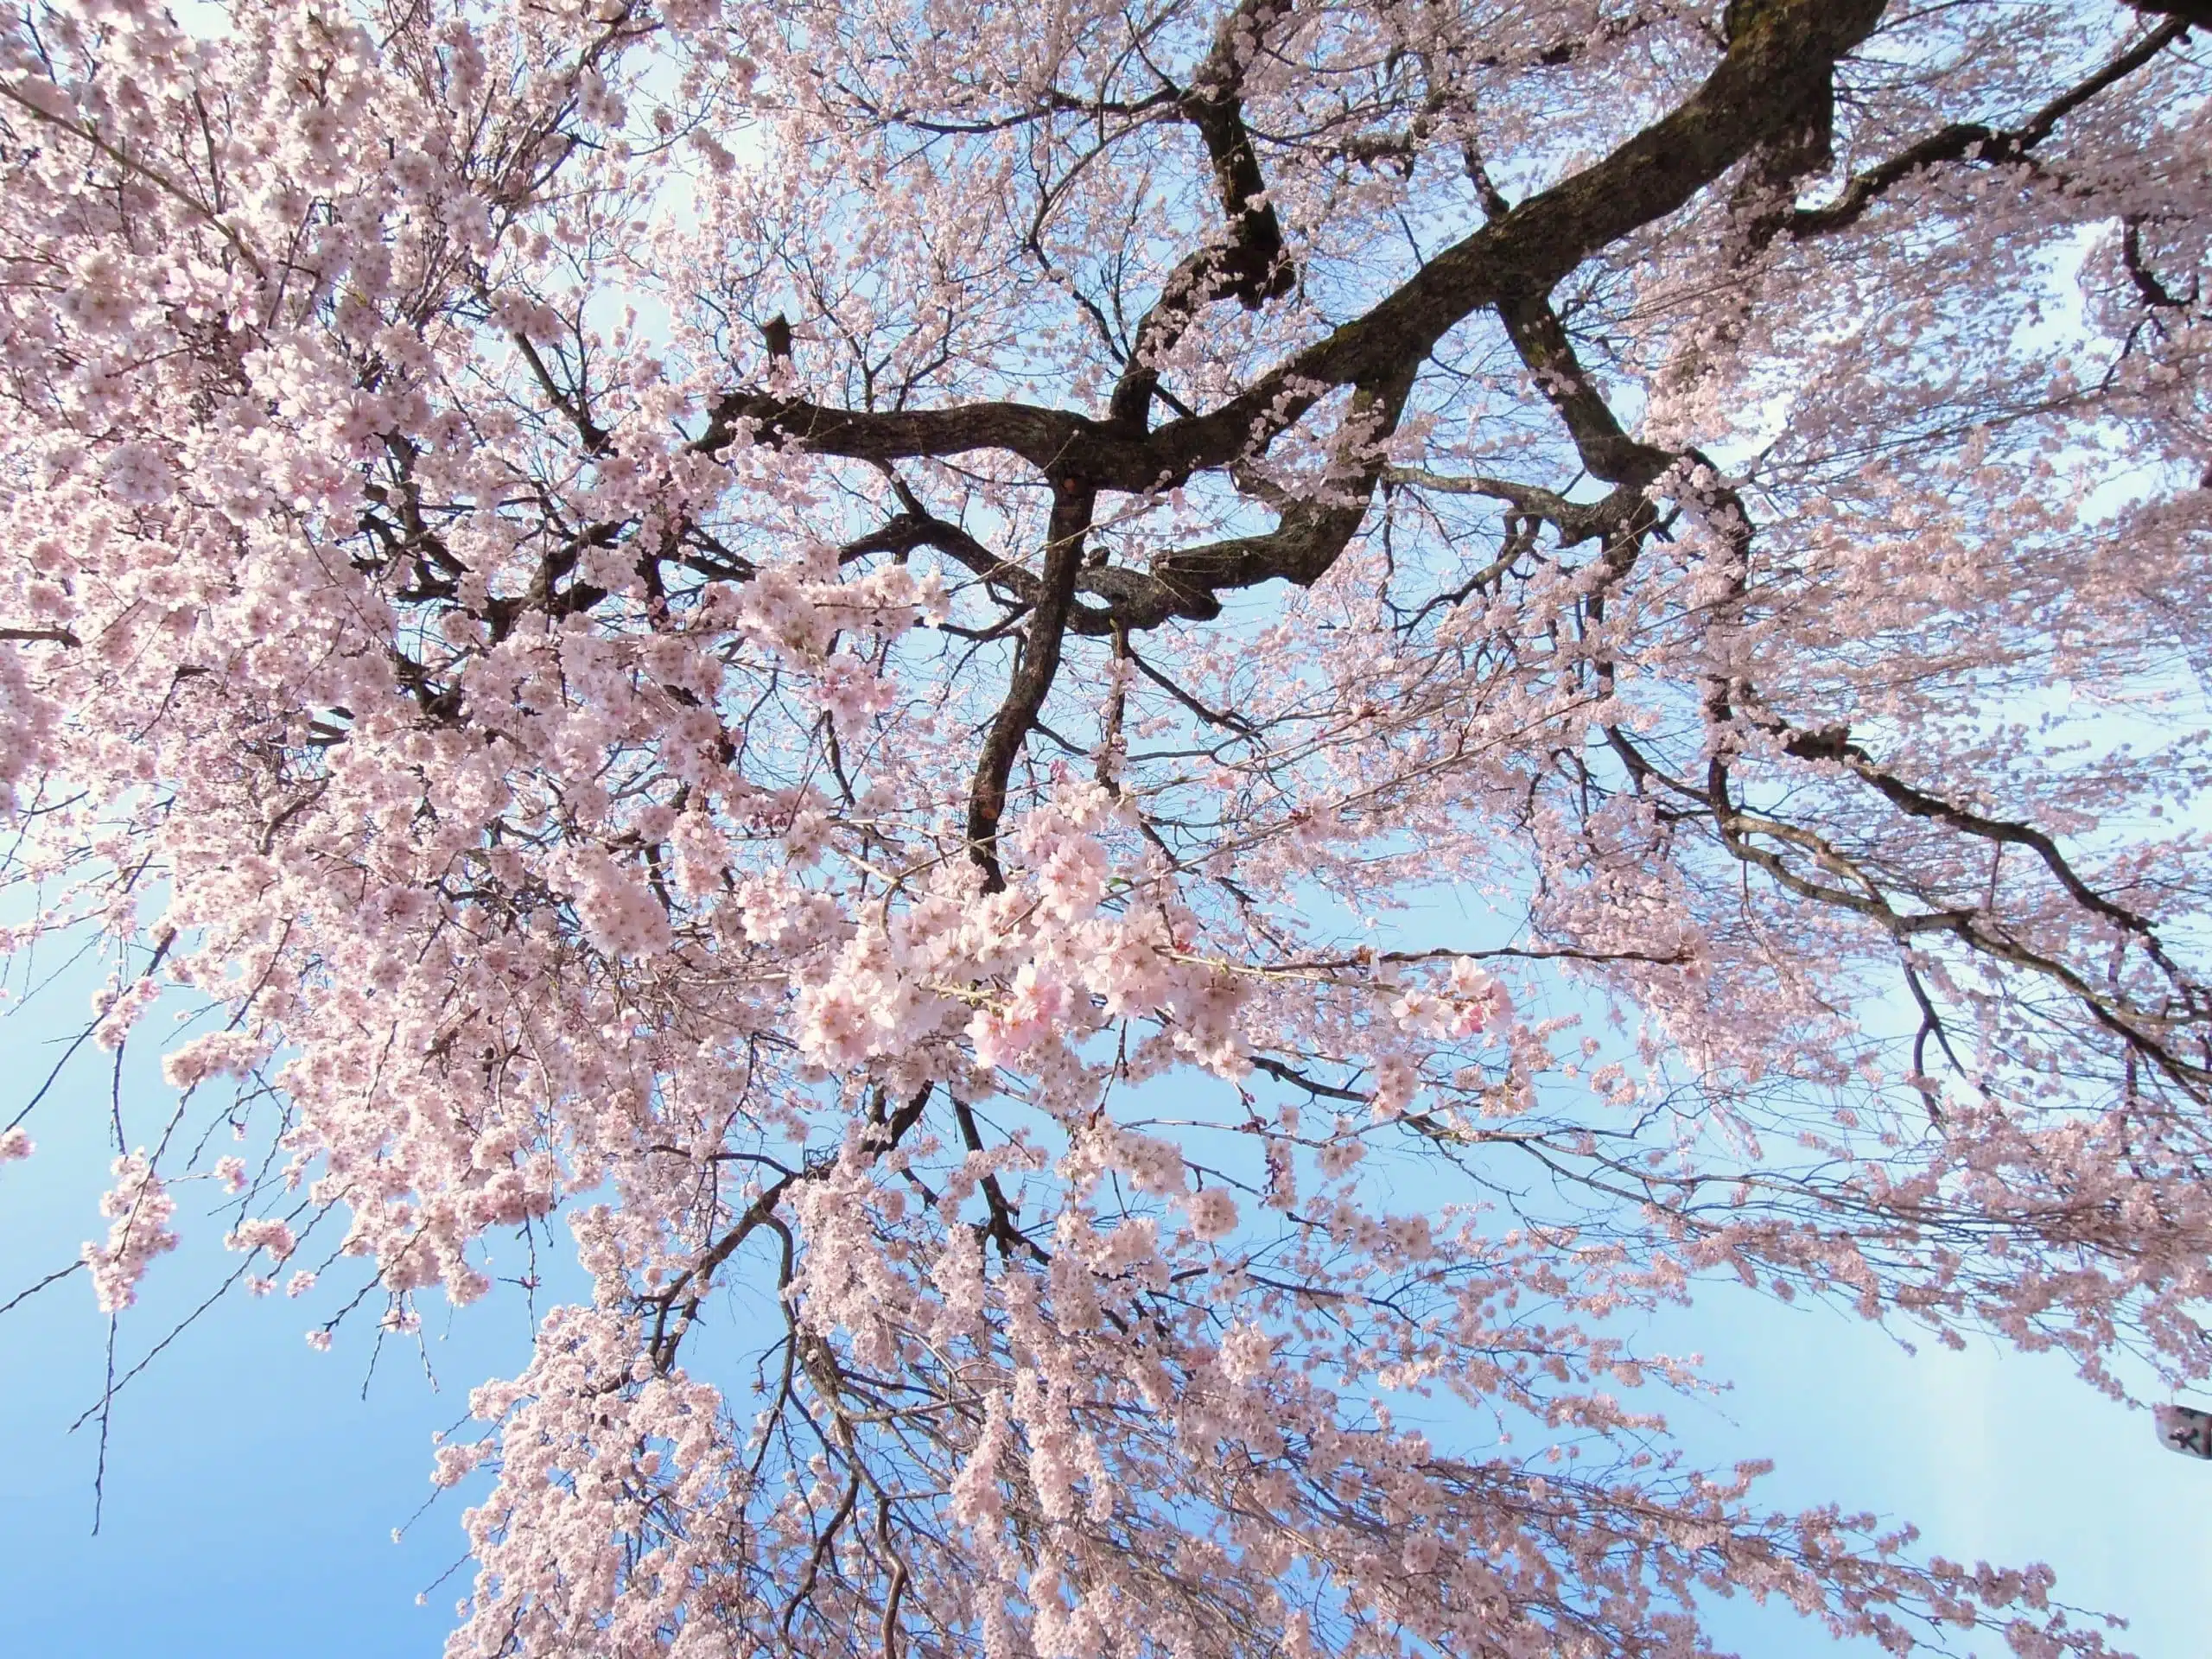 Cherry Blossom Tree canopy and blue sky.